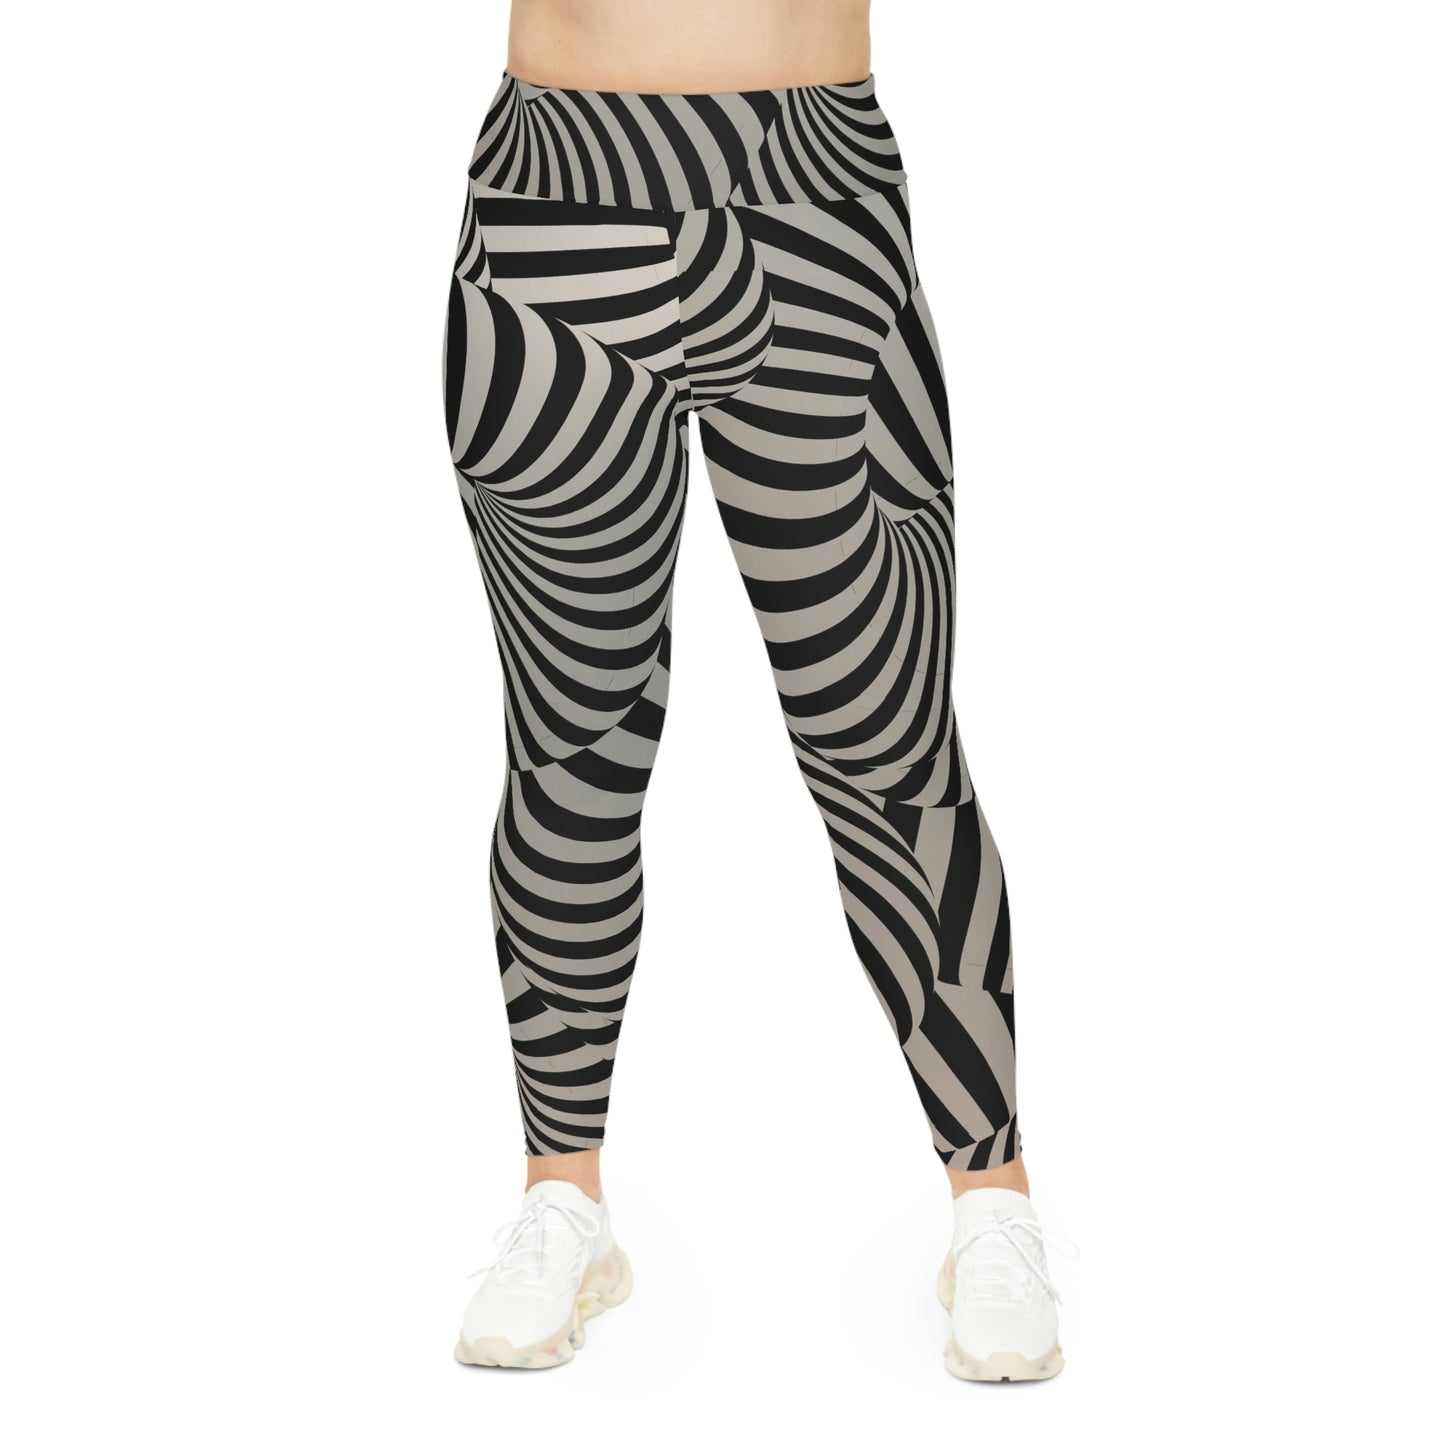 Zebra Plus Size Leggings